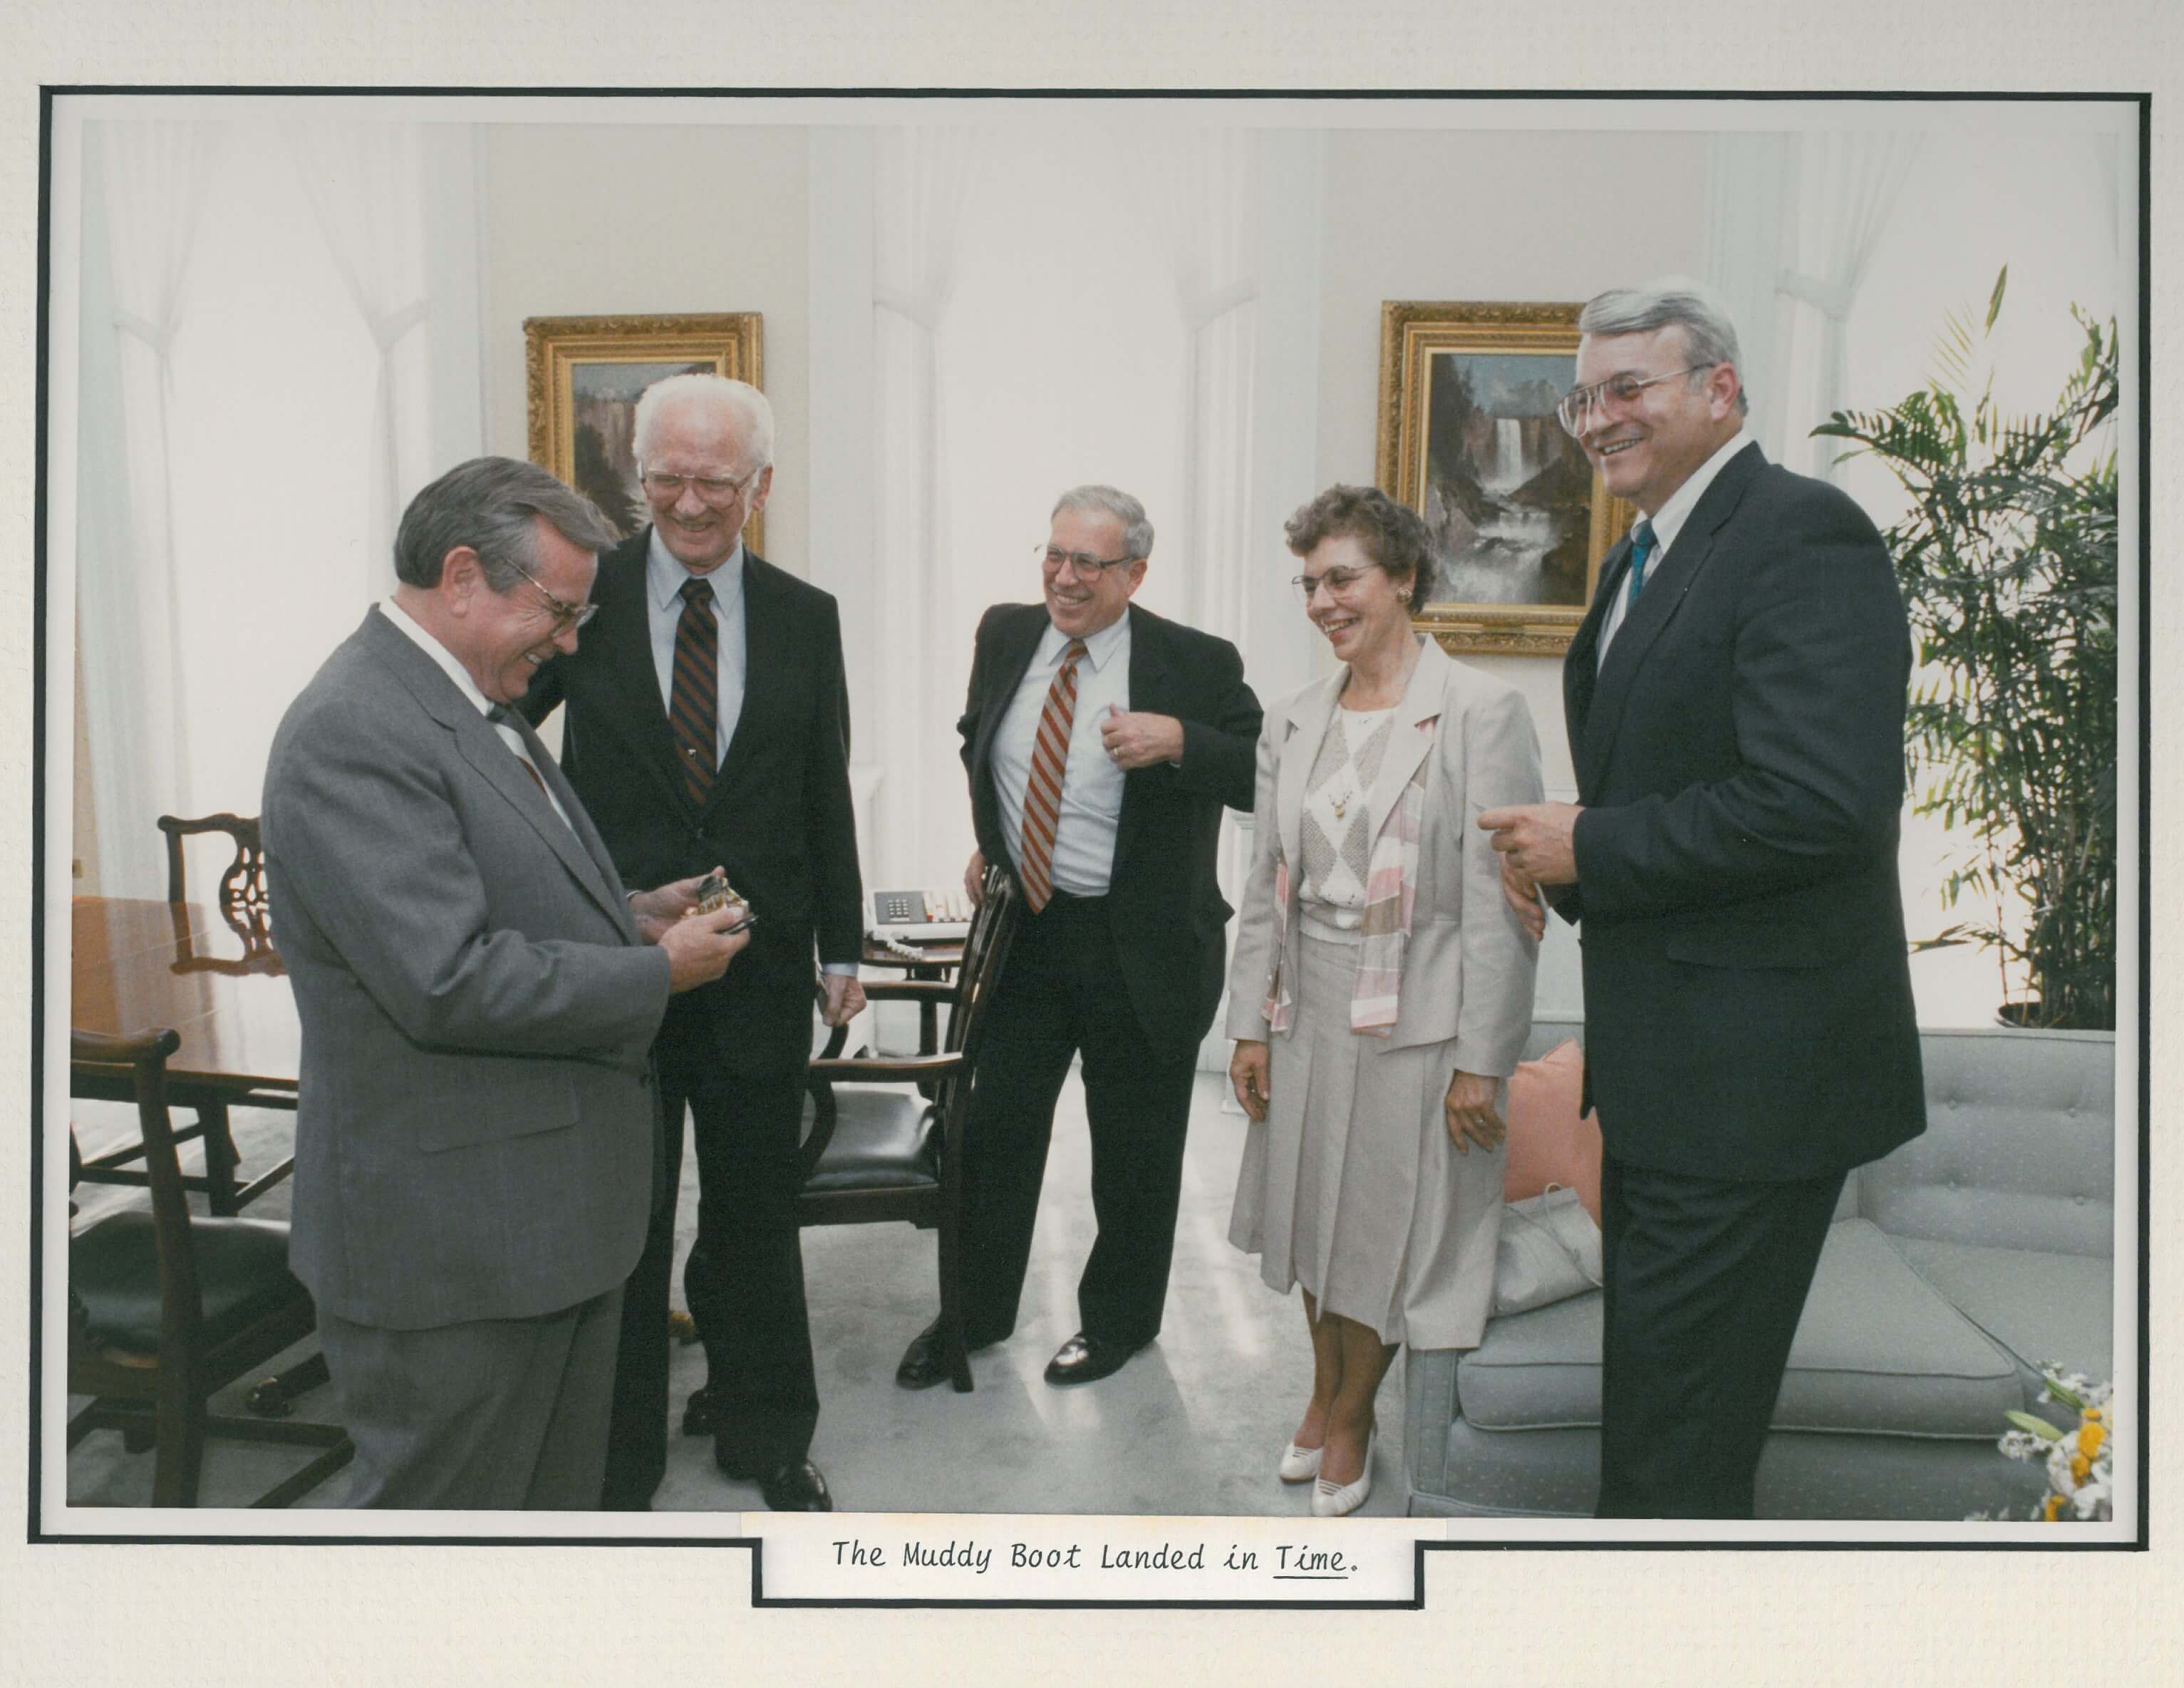 A Time Magazine photo of Senator Howard Baker receiving the Muddy Boot Award in Washington D.C. Presented by R-AEC leadership Gene Joyce, Tom Hill, Jesse Noritake, and Ben Adams.